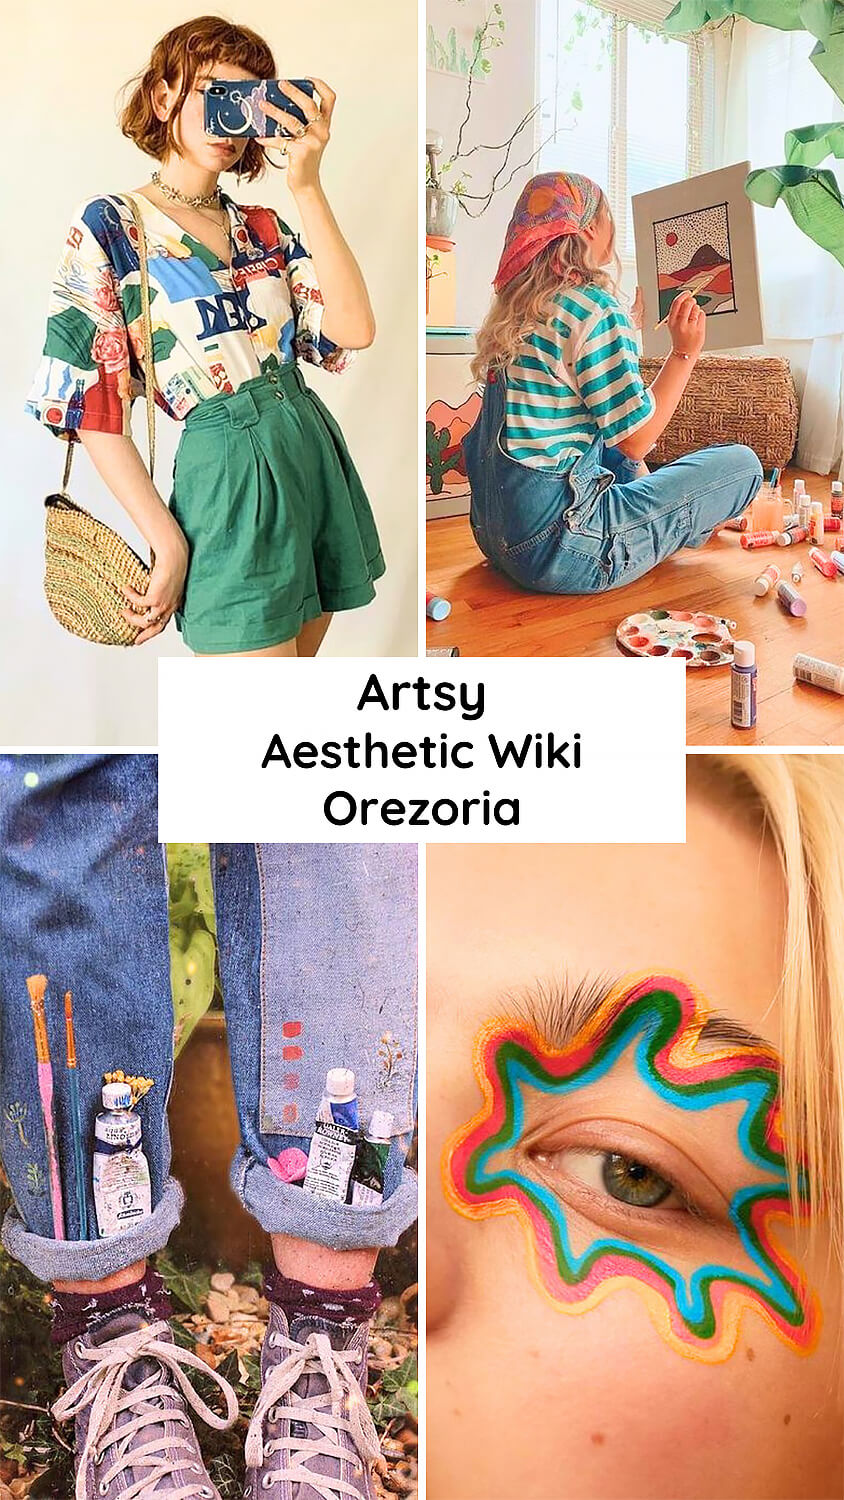 What is the Artsy Aesthetic - Aesthetics Wiki - Orezoria